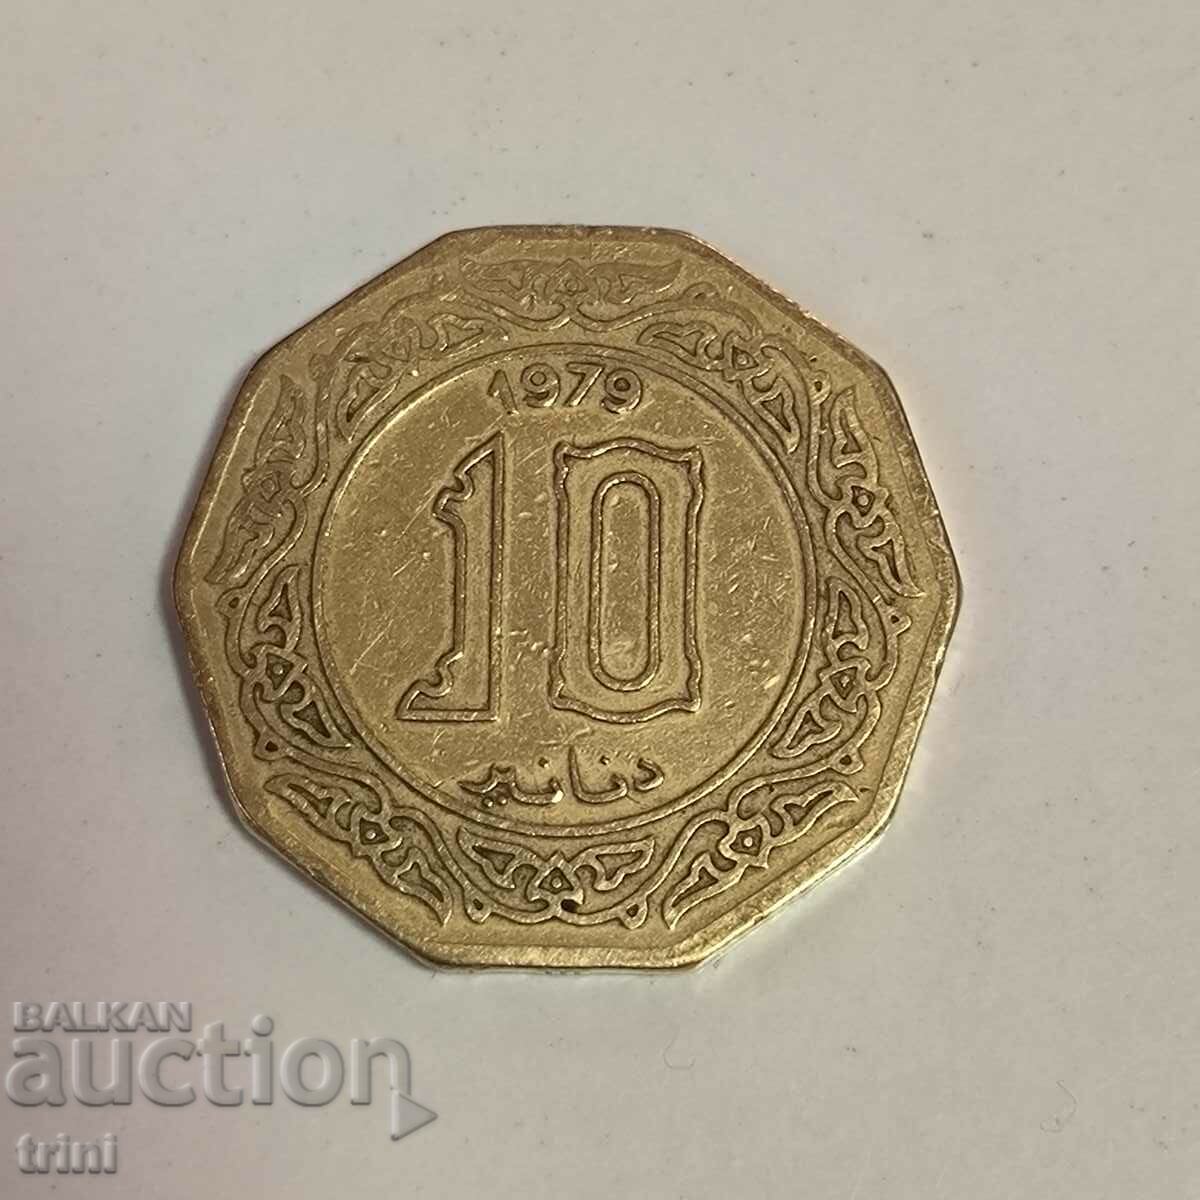 Algeria 10 dinars 1979 year g32